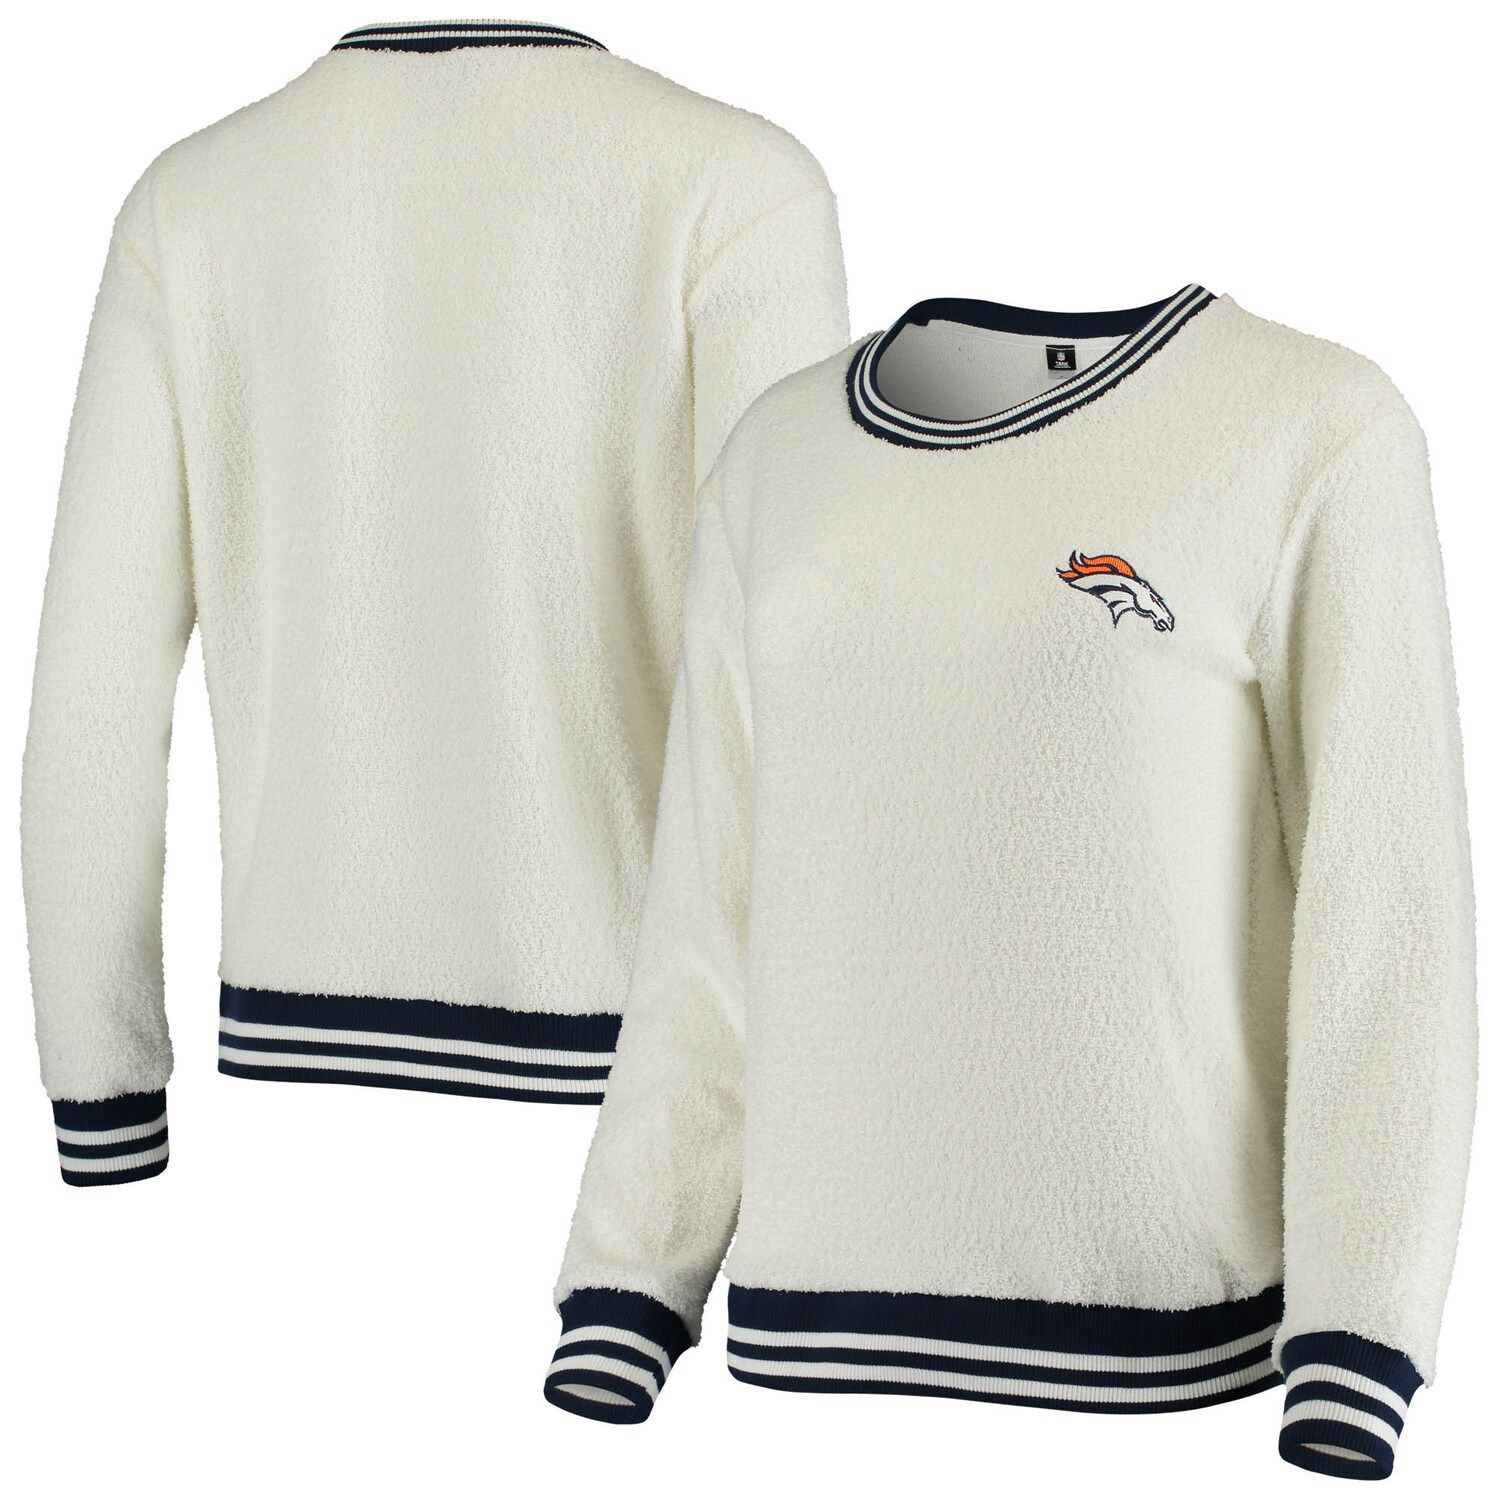 Image for Unbranded Women's Concepts Sport Cream/Navy Denver Broncos Granite Knit Pullover Sweatshirt at Kohl's.